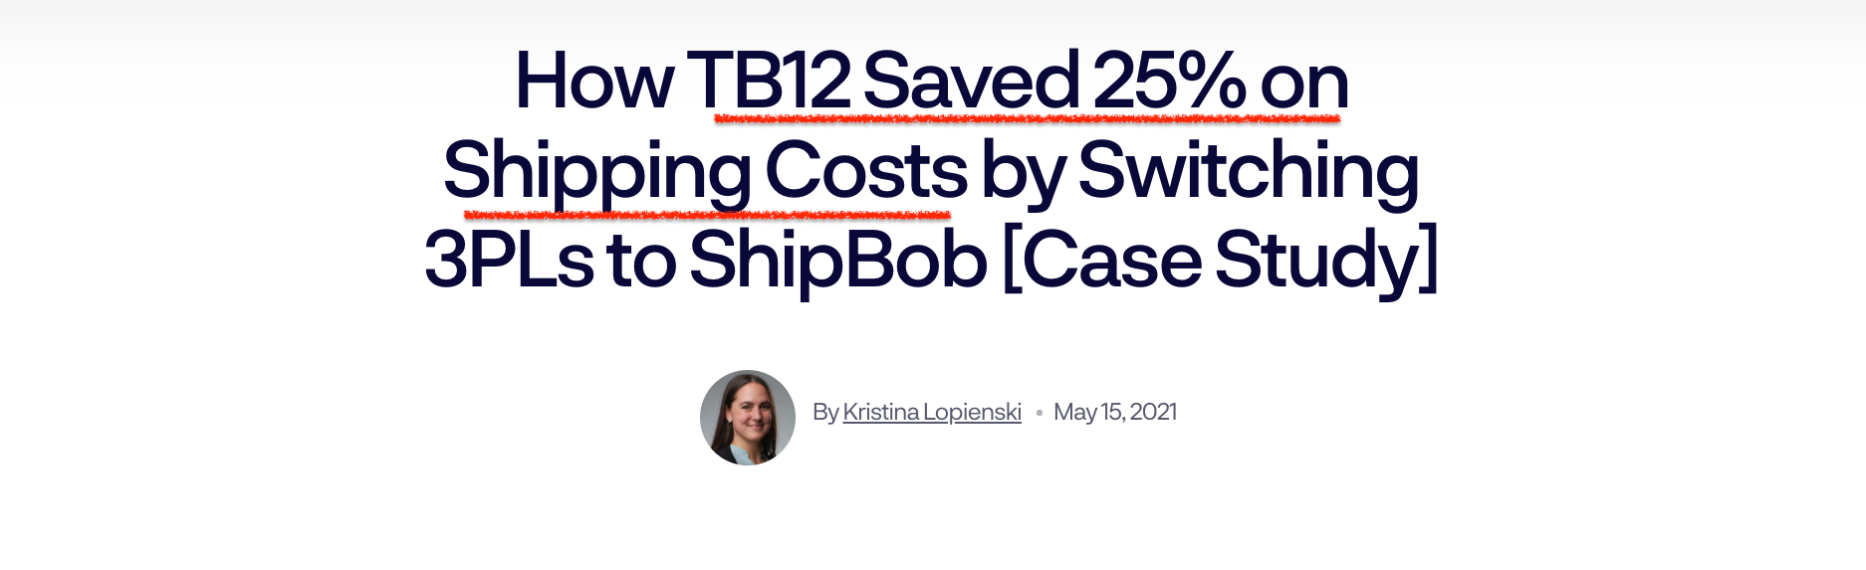 TB12 Article Shipbob